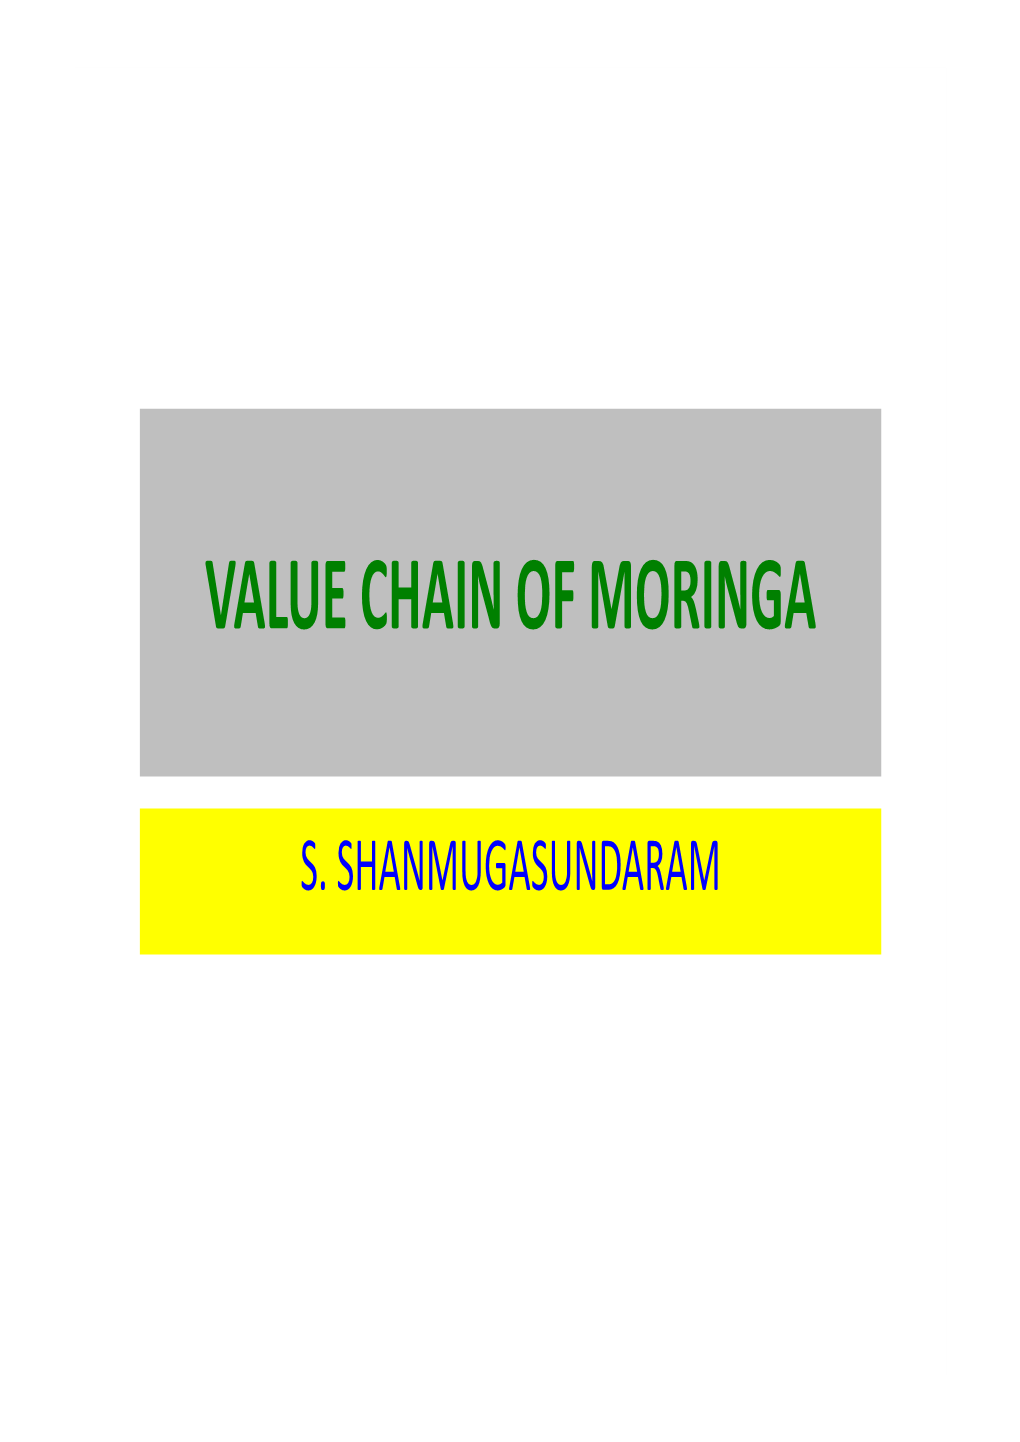 Value Chain of Moringa